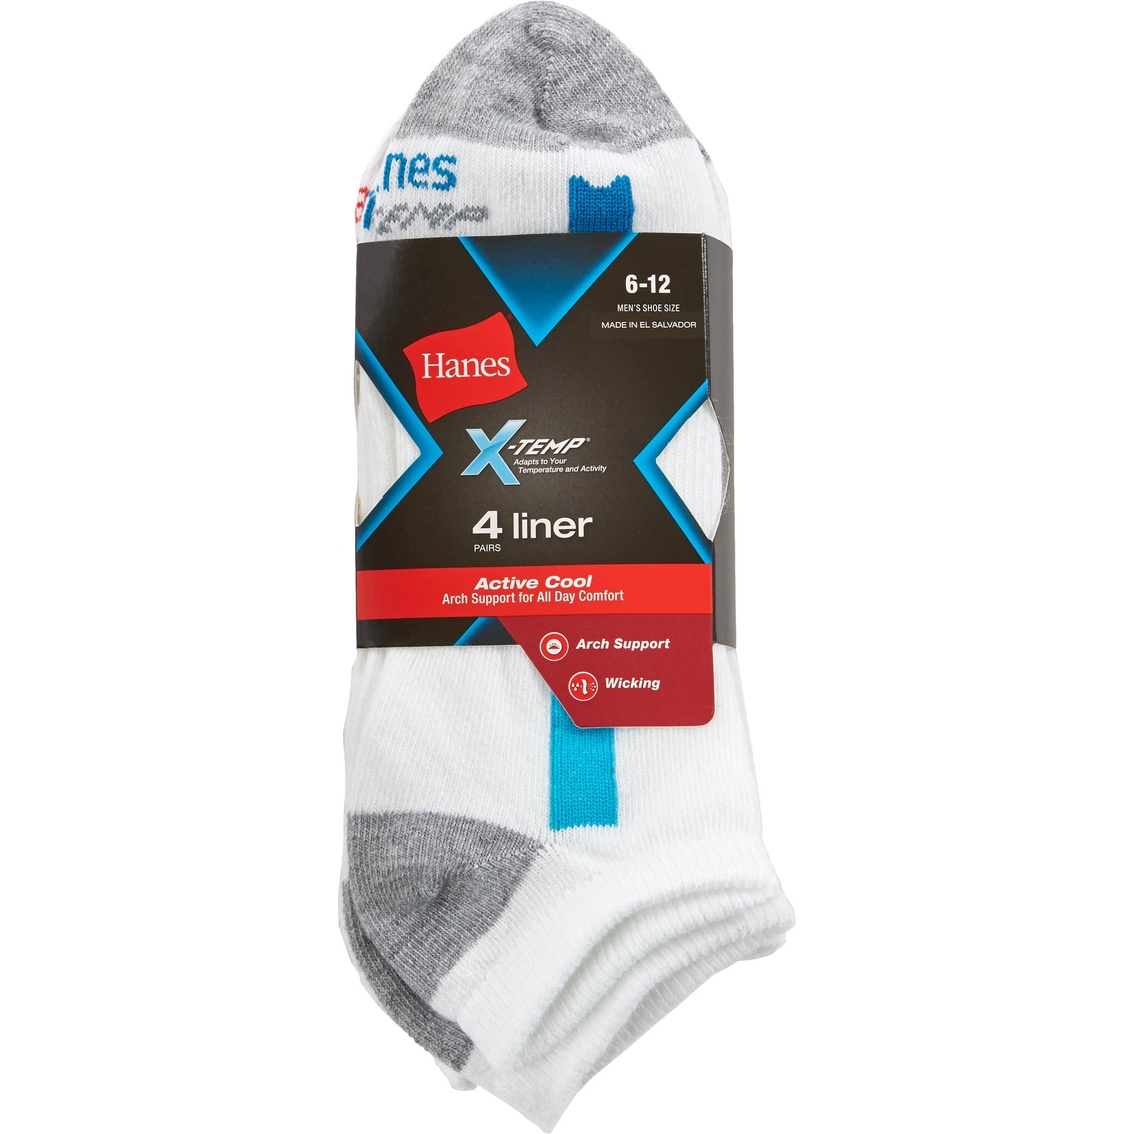 Hanes X-temp Arch Support Liner Socks | Socks | Apparel | Shop The Exchange